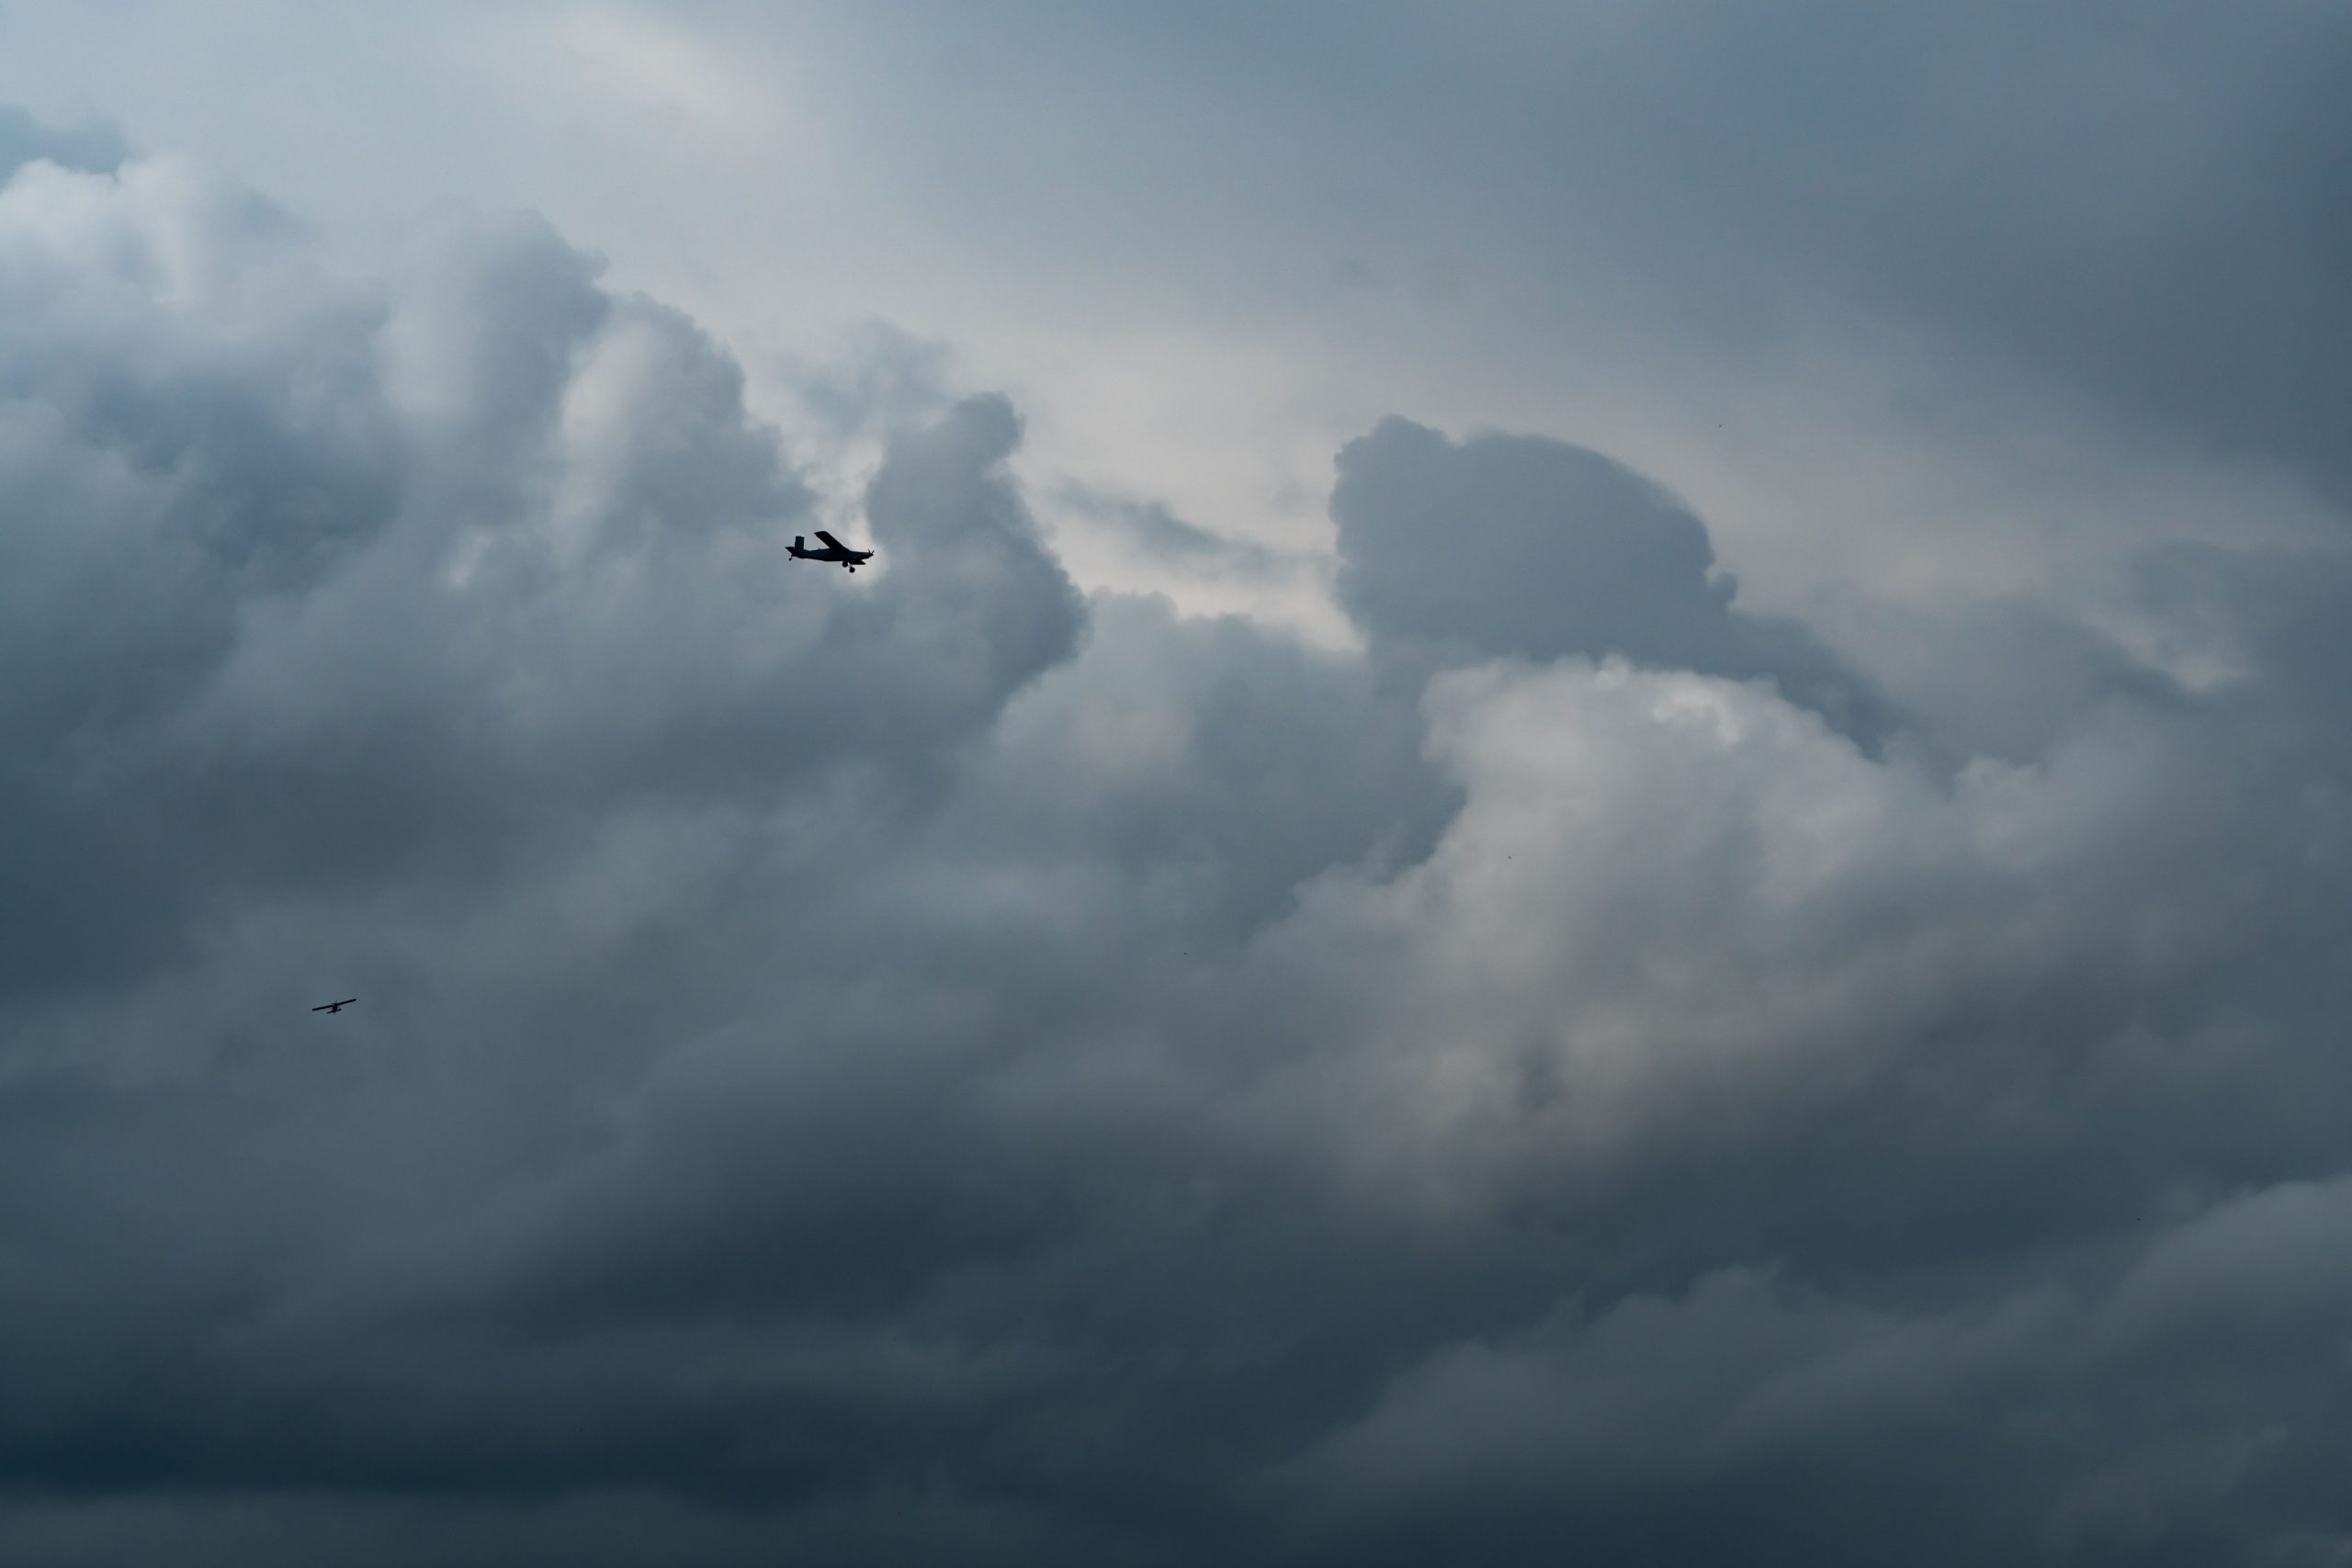 zasiewanie chmur, fot. Fahroni, Shutterstock